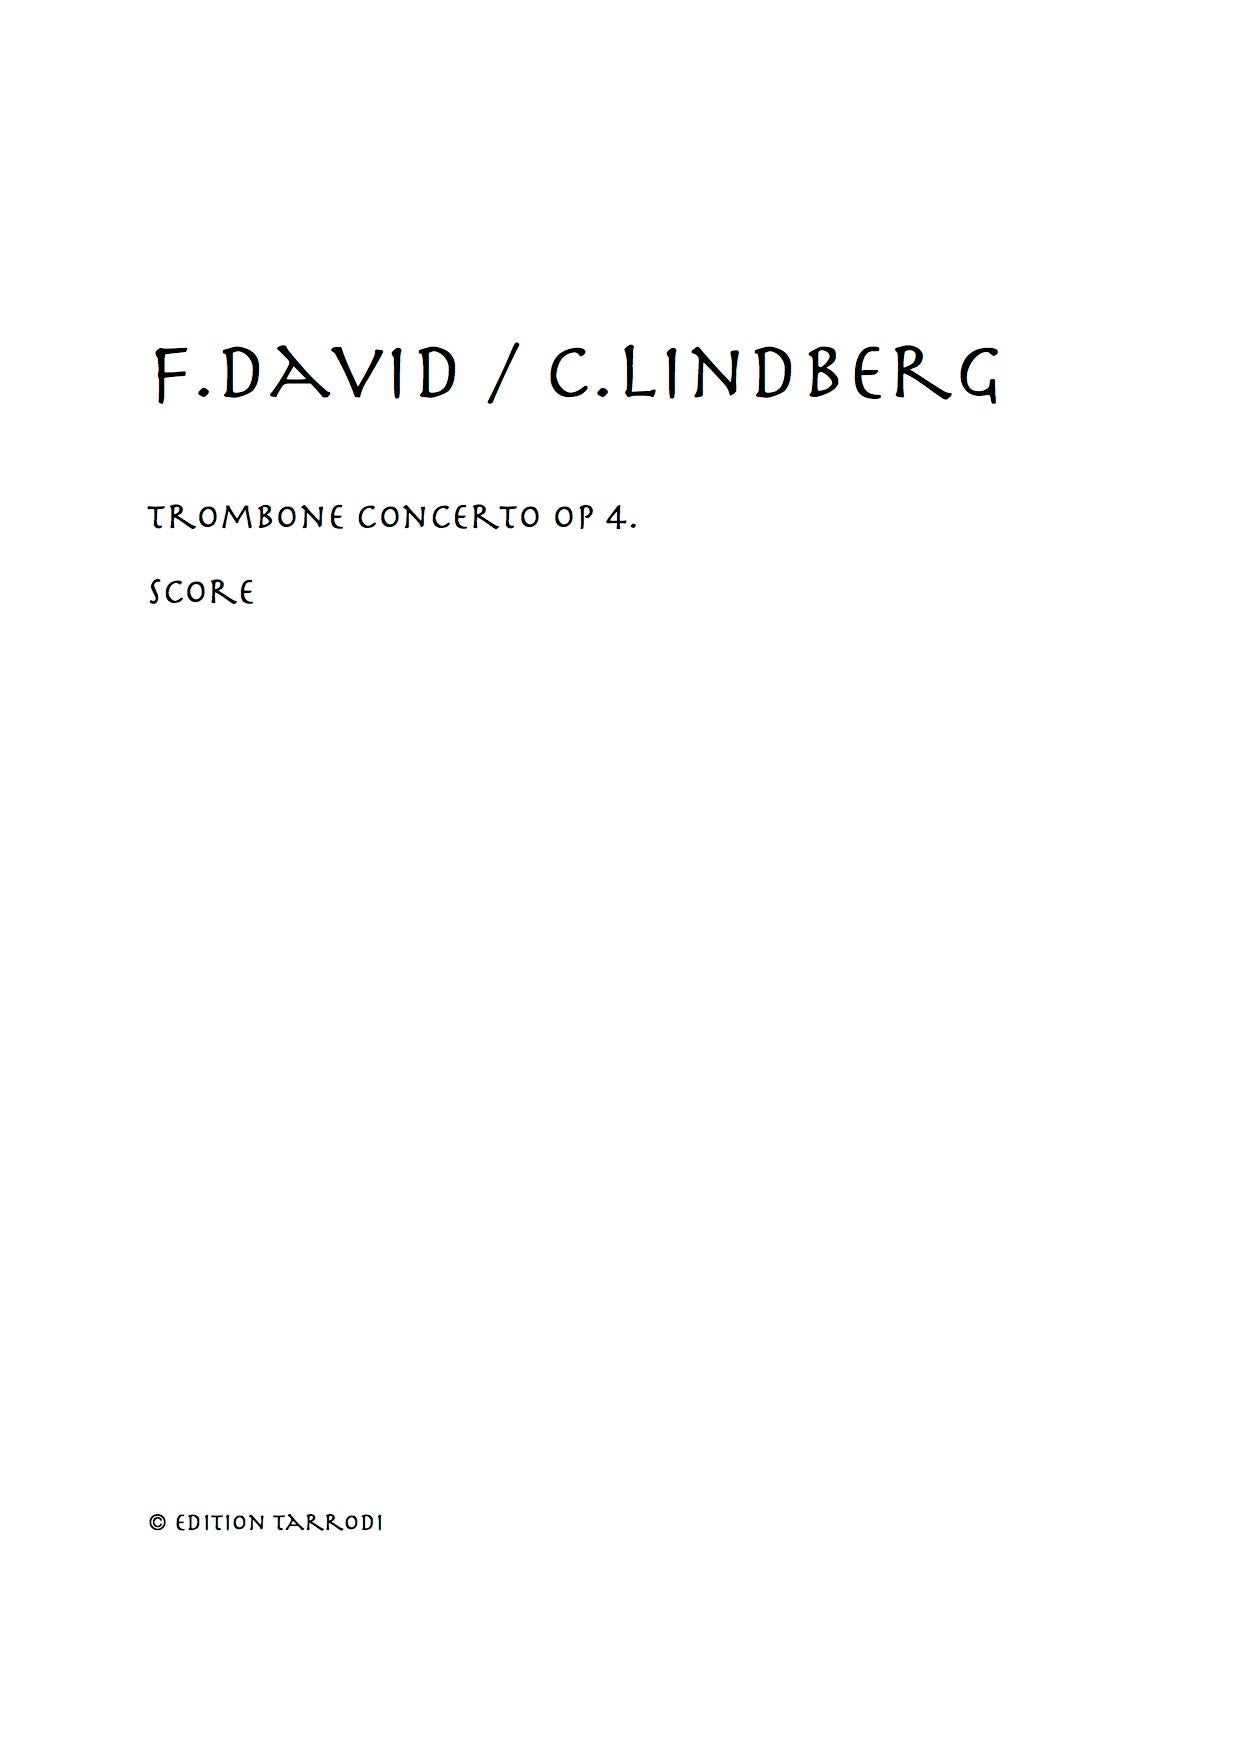 F. David / C. Lindberg: Trombone Concerto op 4